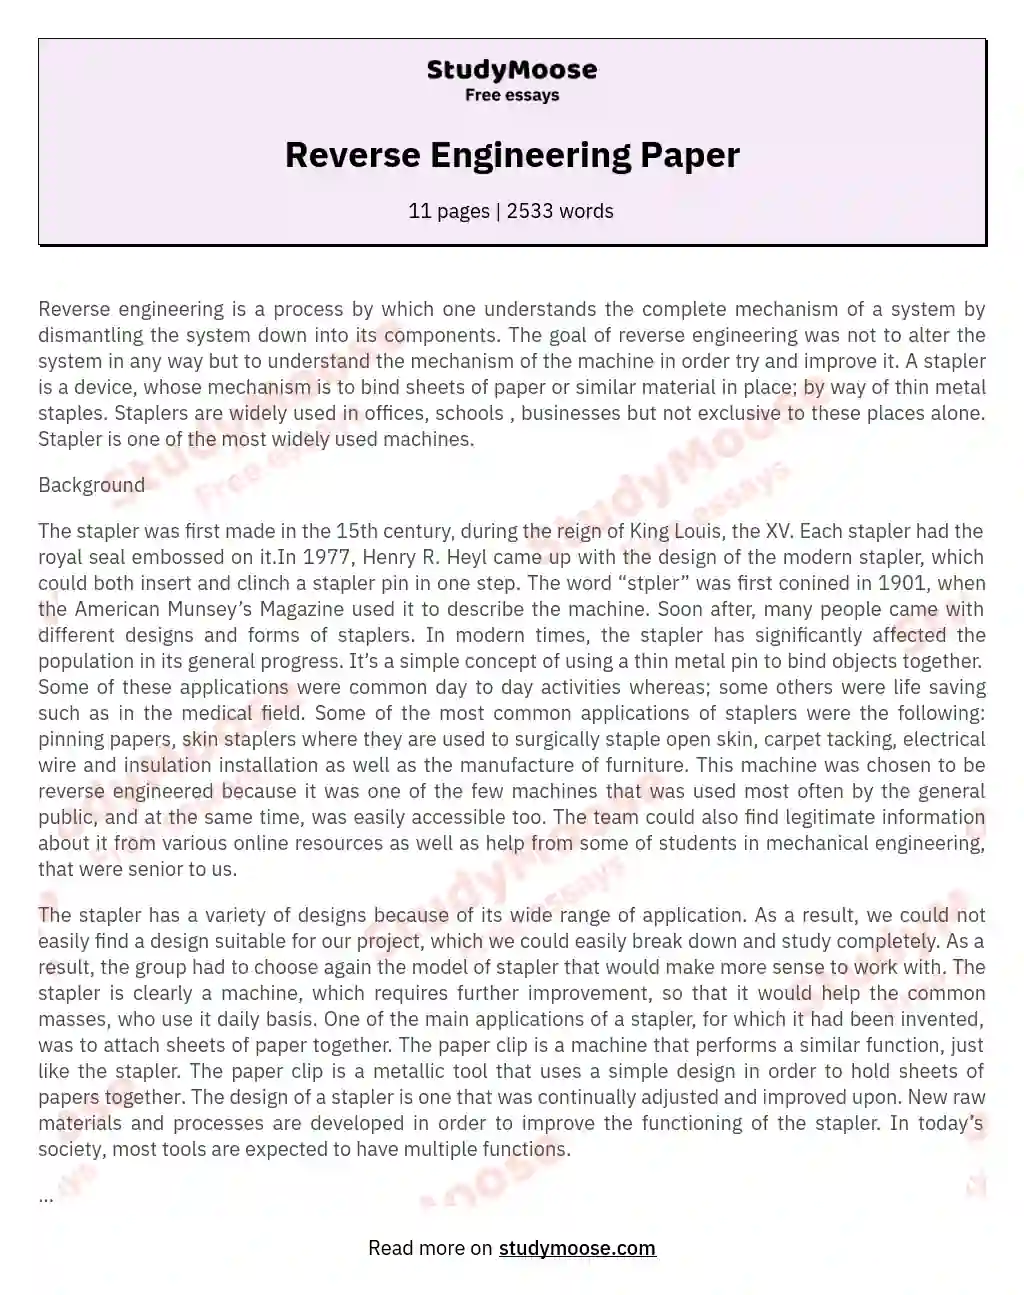 Reverse Engineering Paper essay